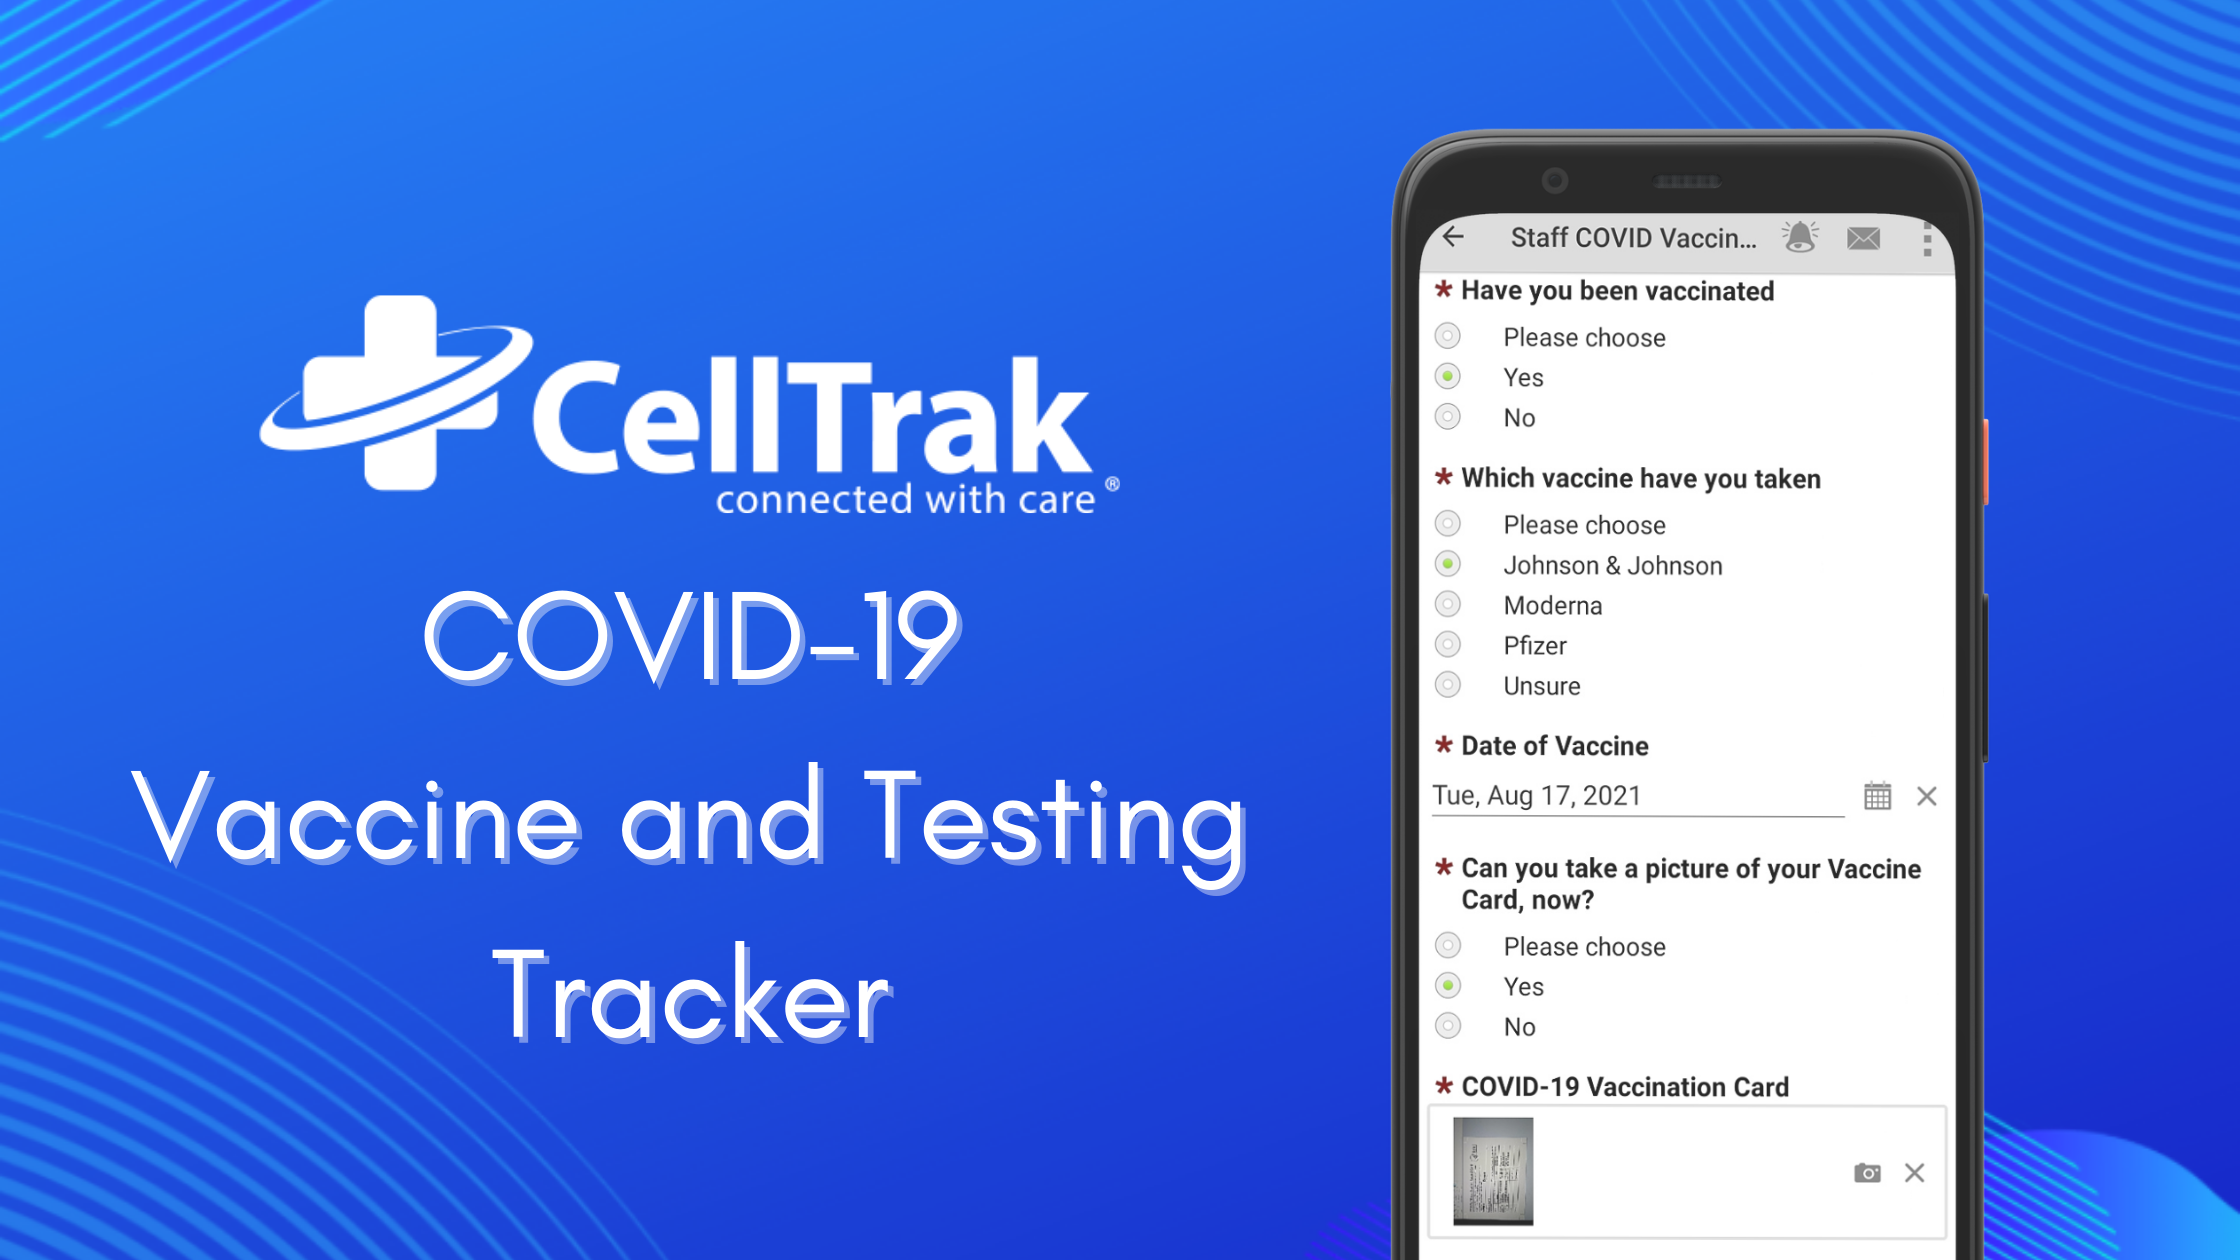 celltrak covid-19 testing tracker vaccine method